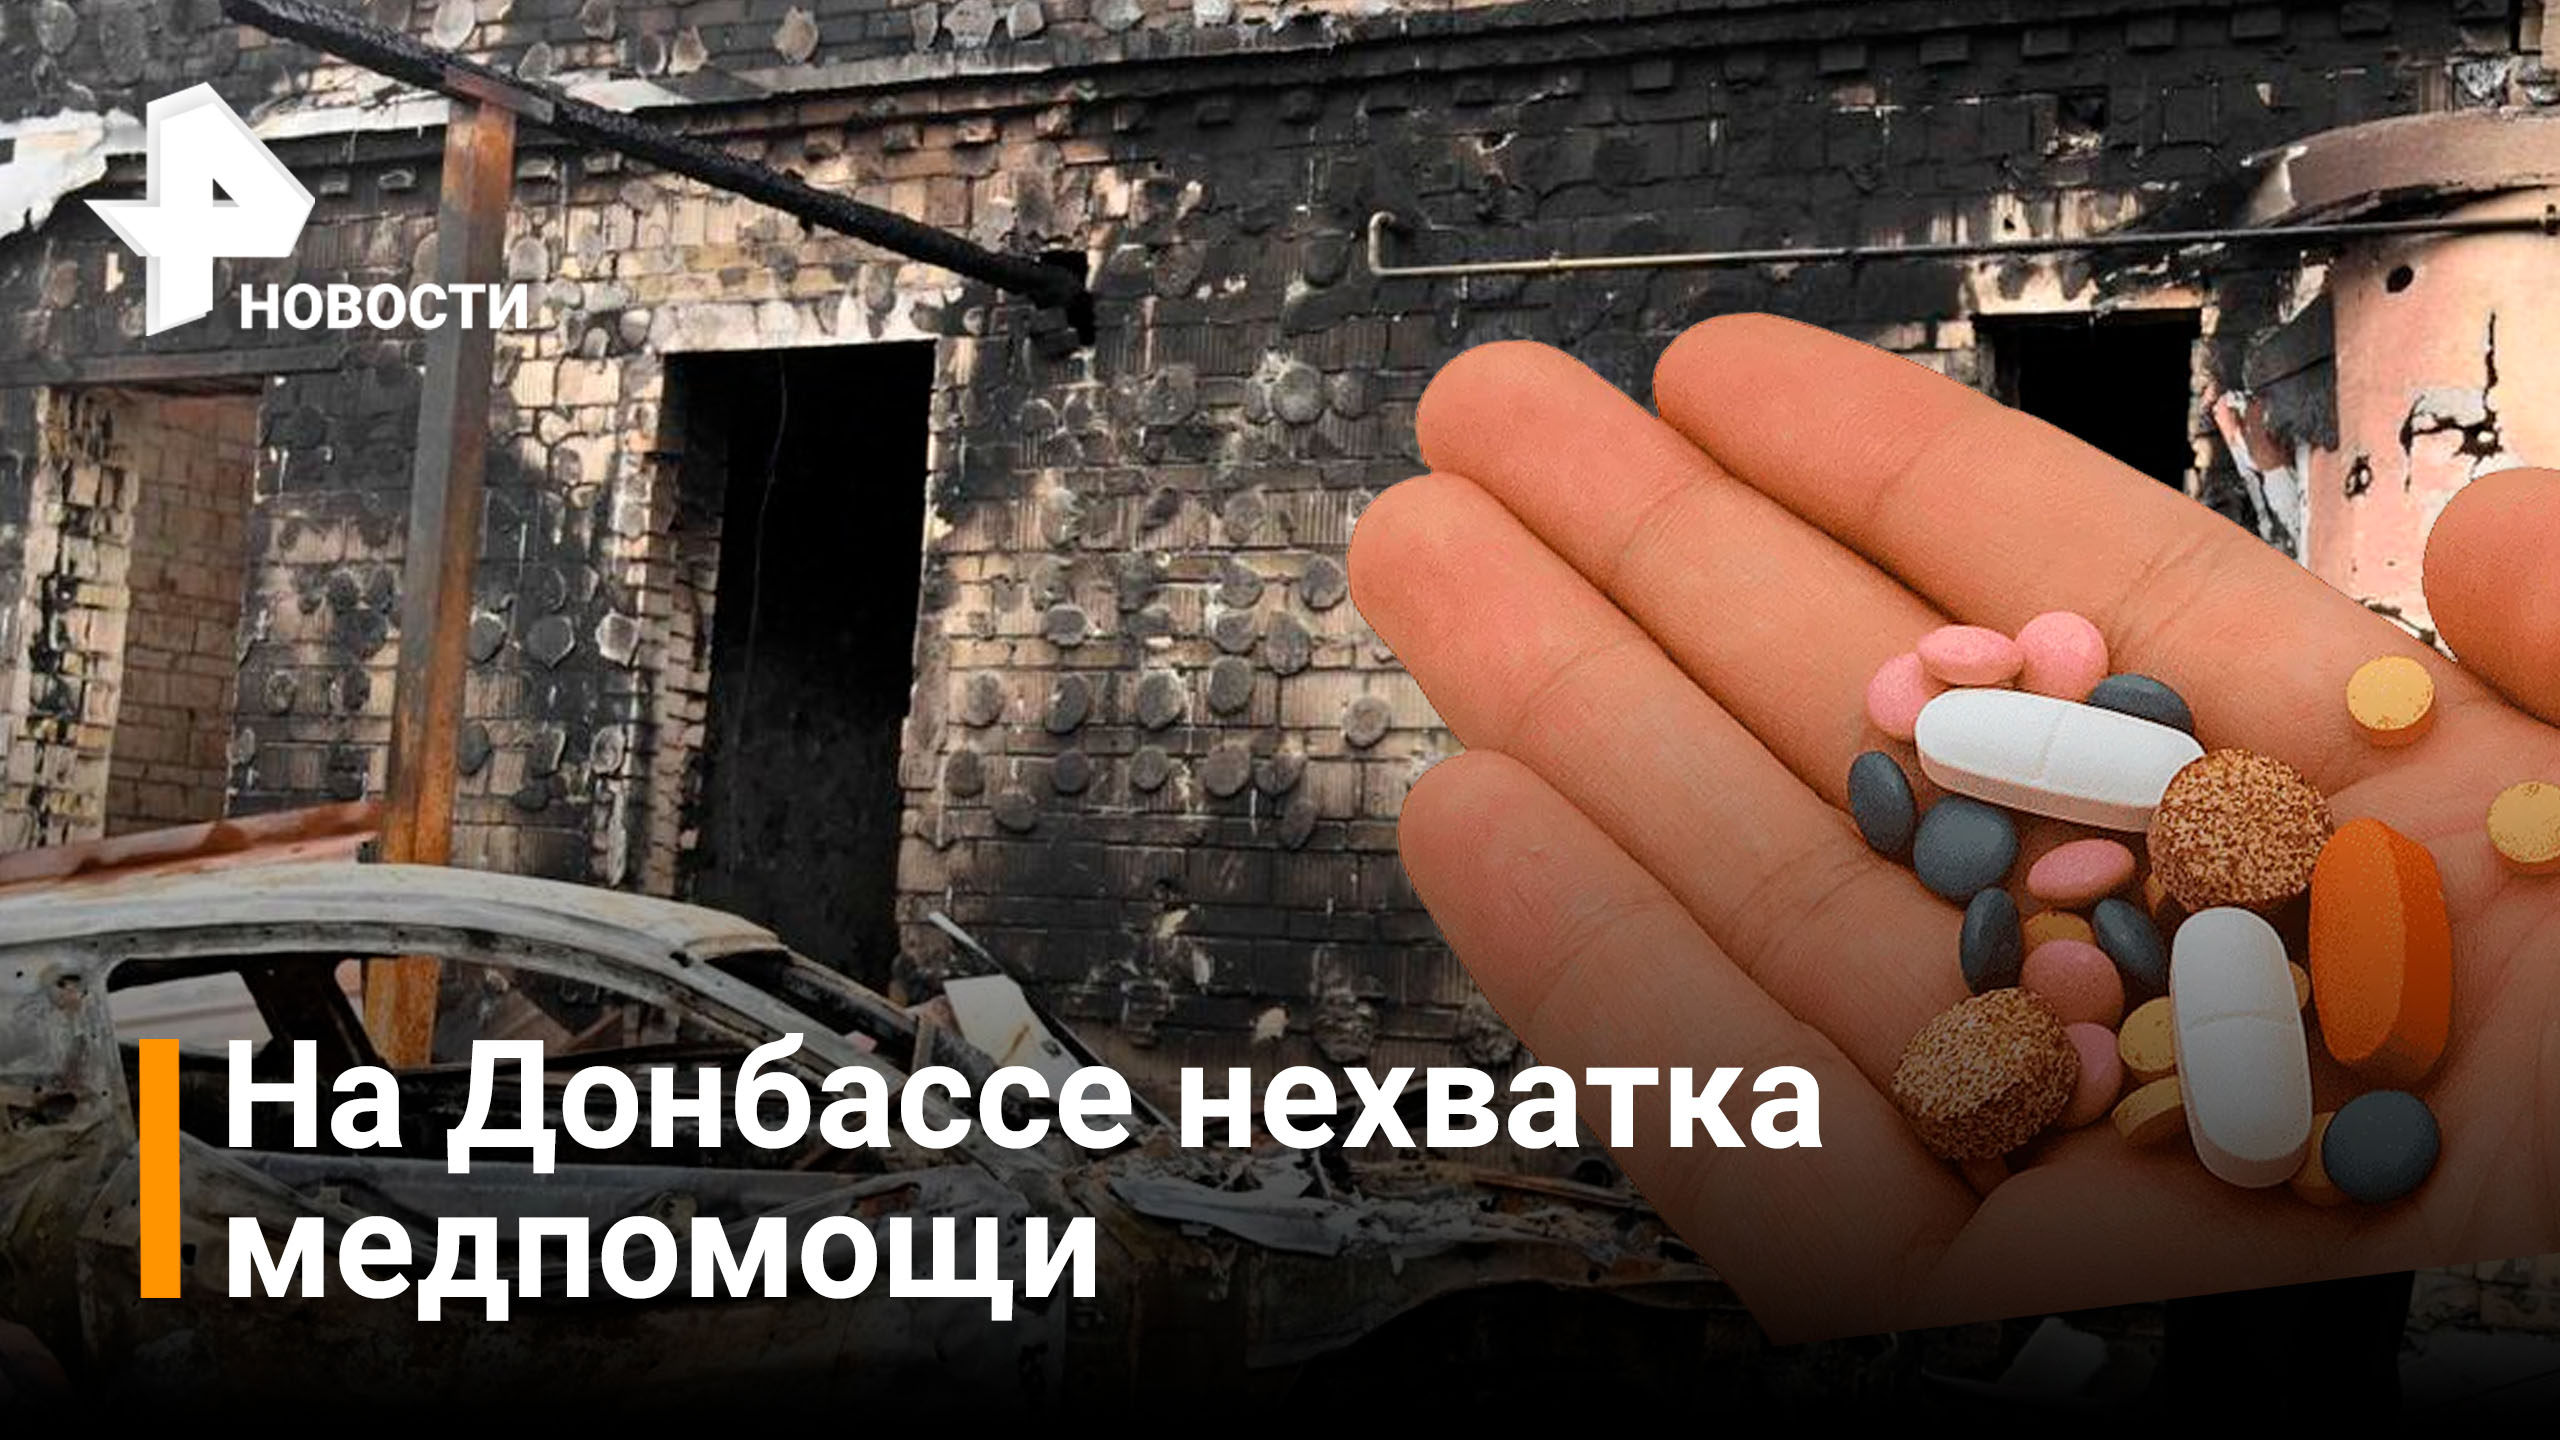 Жители Донбасса столкнулись с нехваткой медпомощи / РЕН Новости